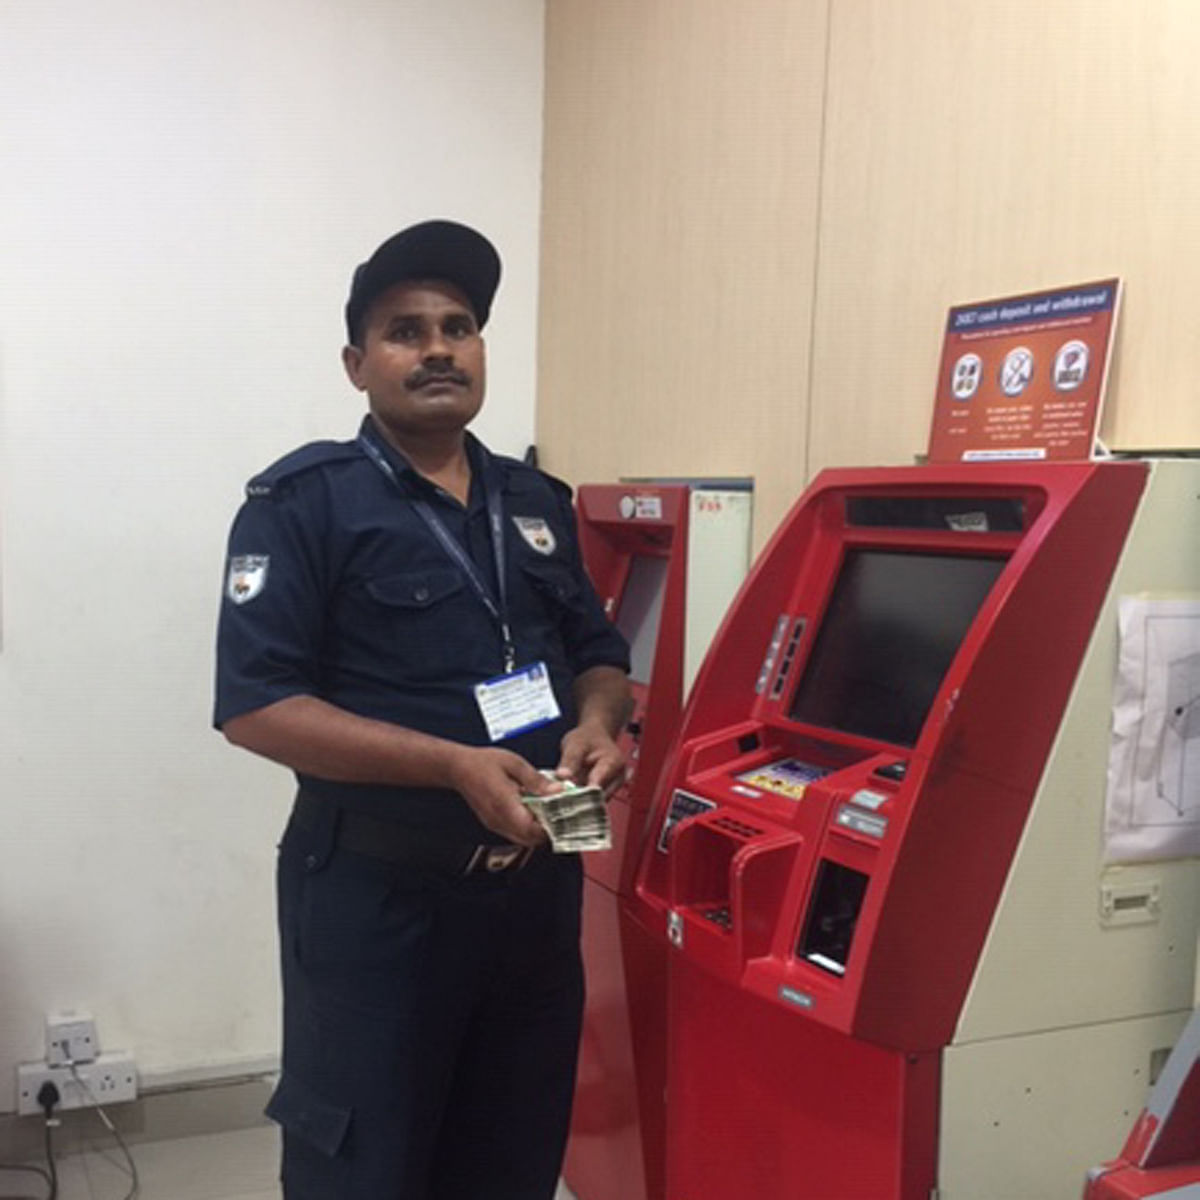 Cash Deposit Machine spills 96k, customer returns it